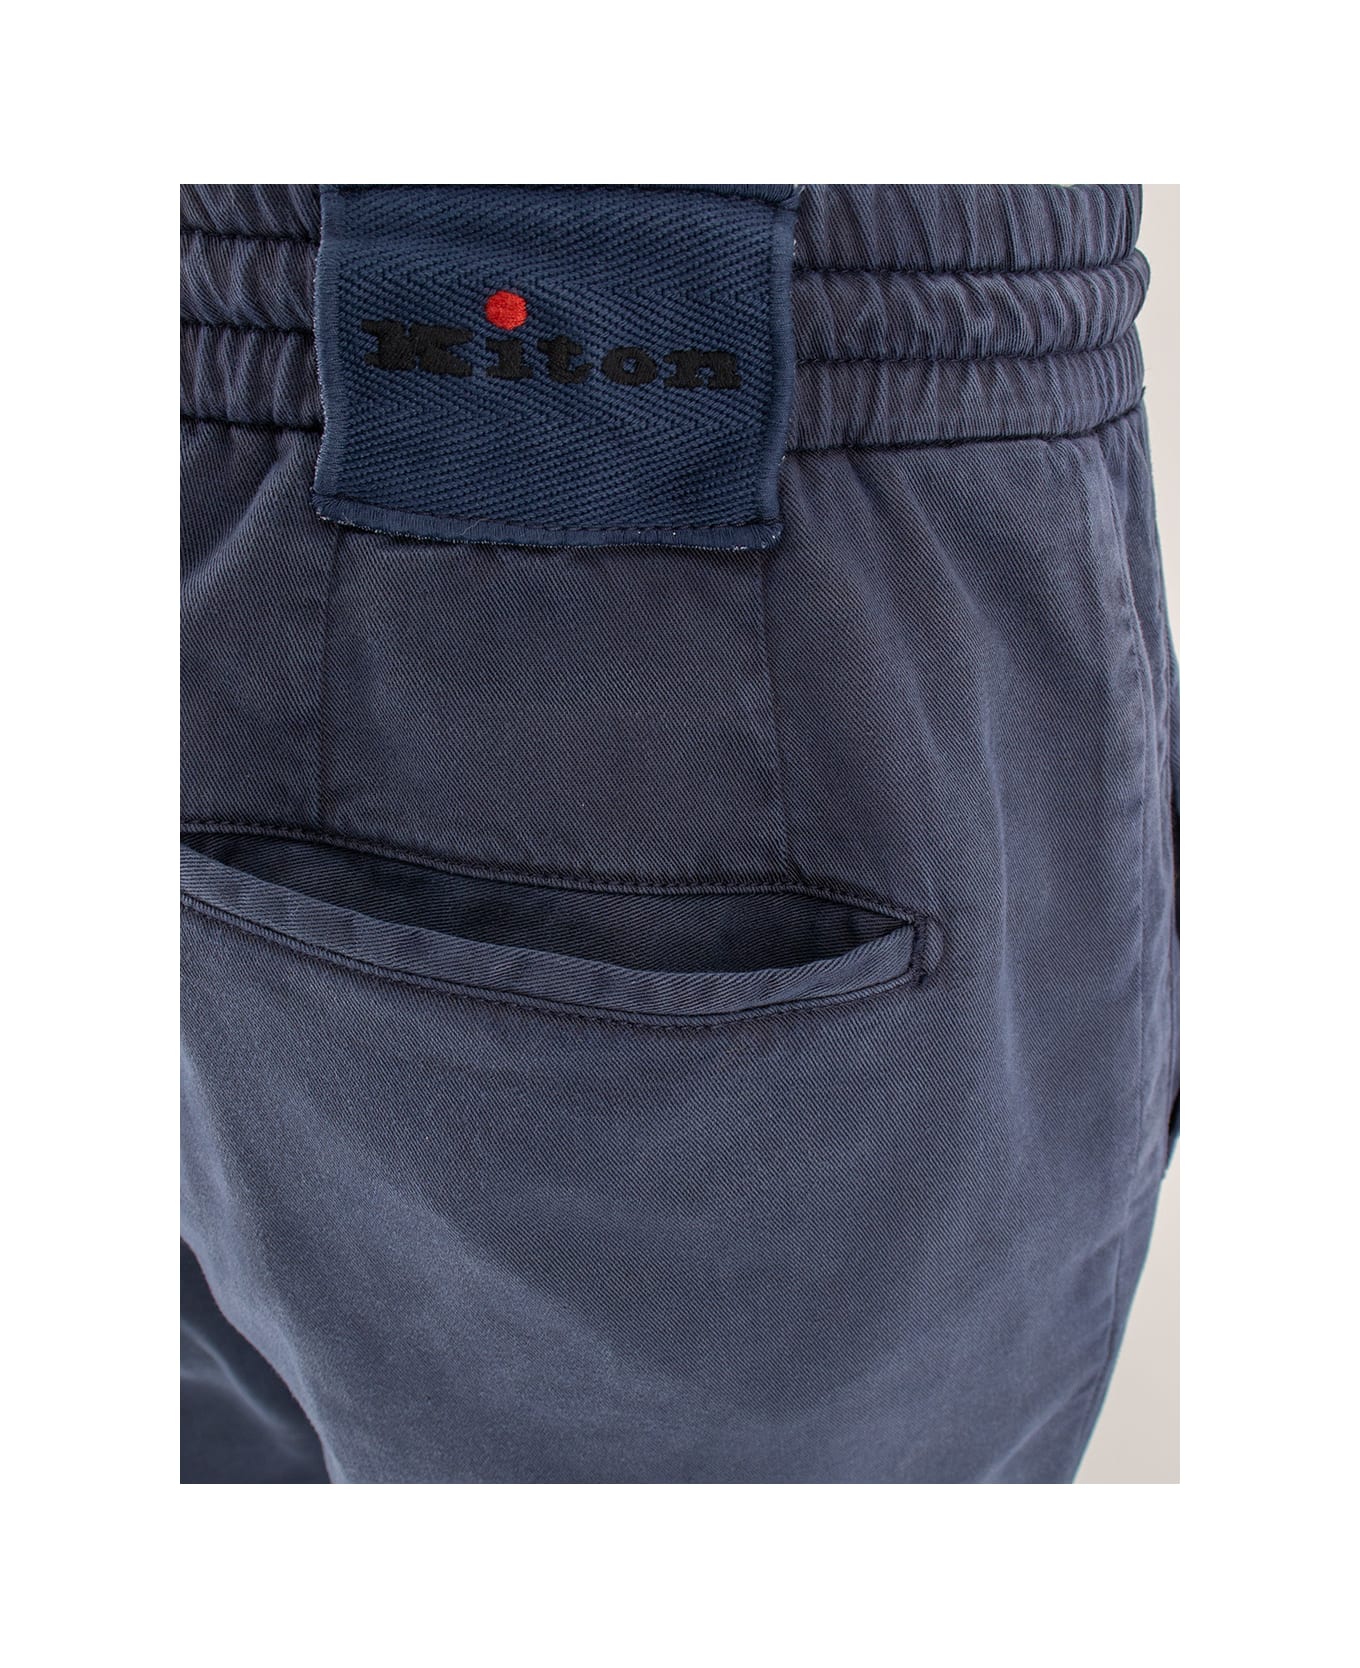 Kiton Trousers Norwich - NAVY BLUE